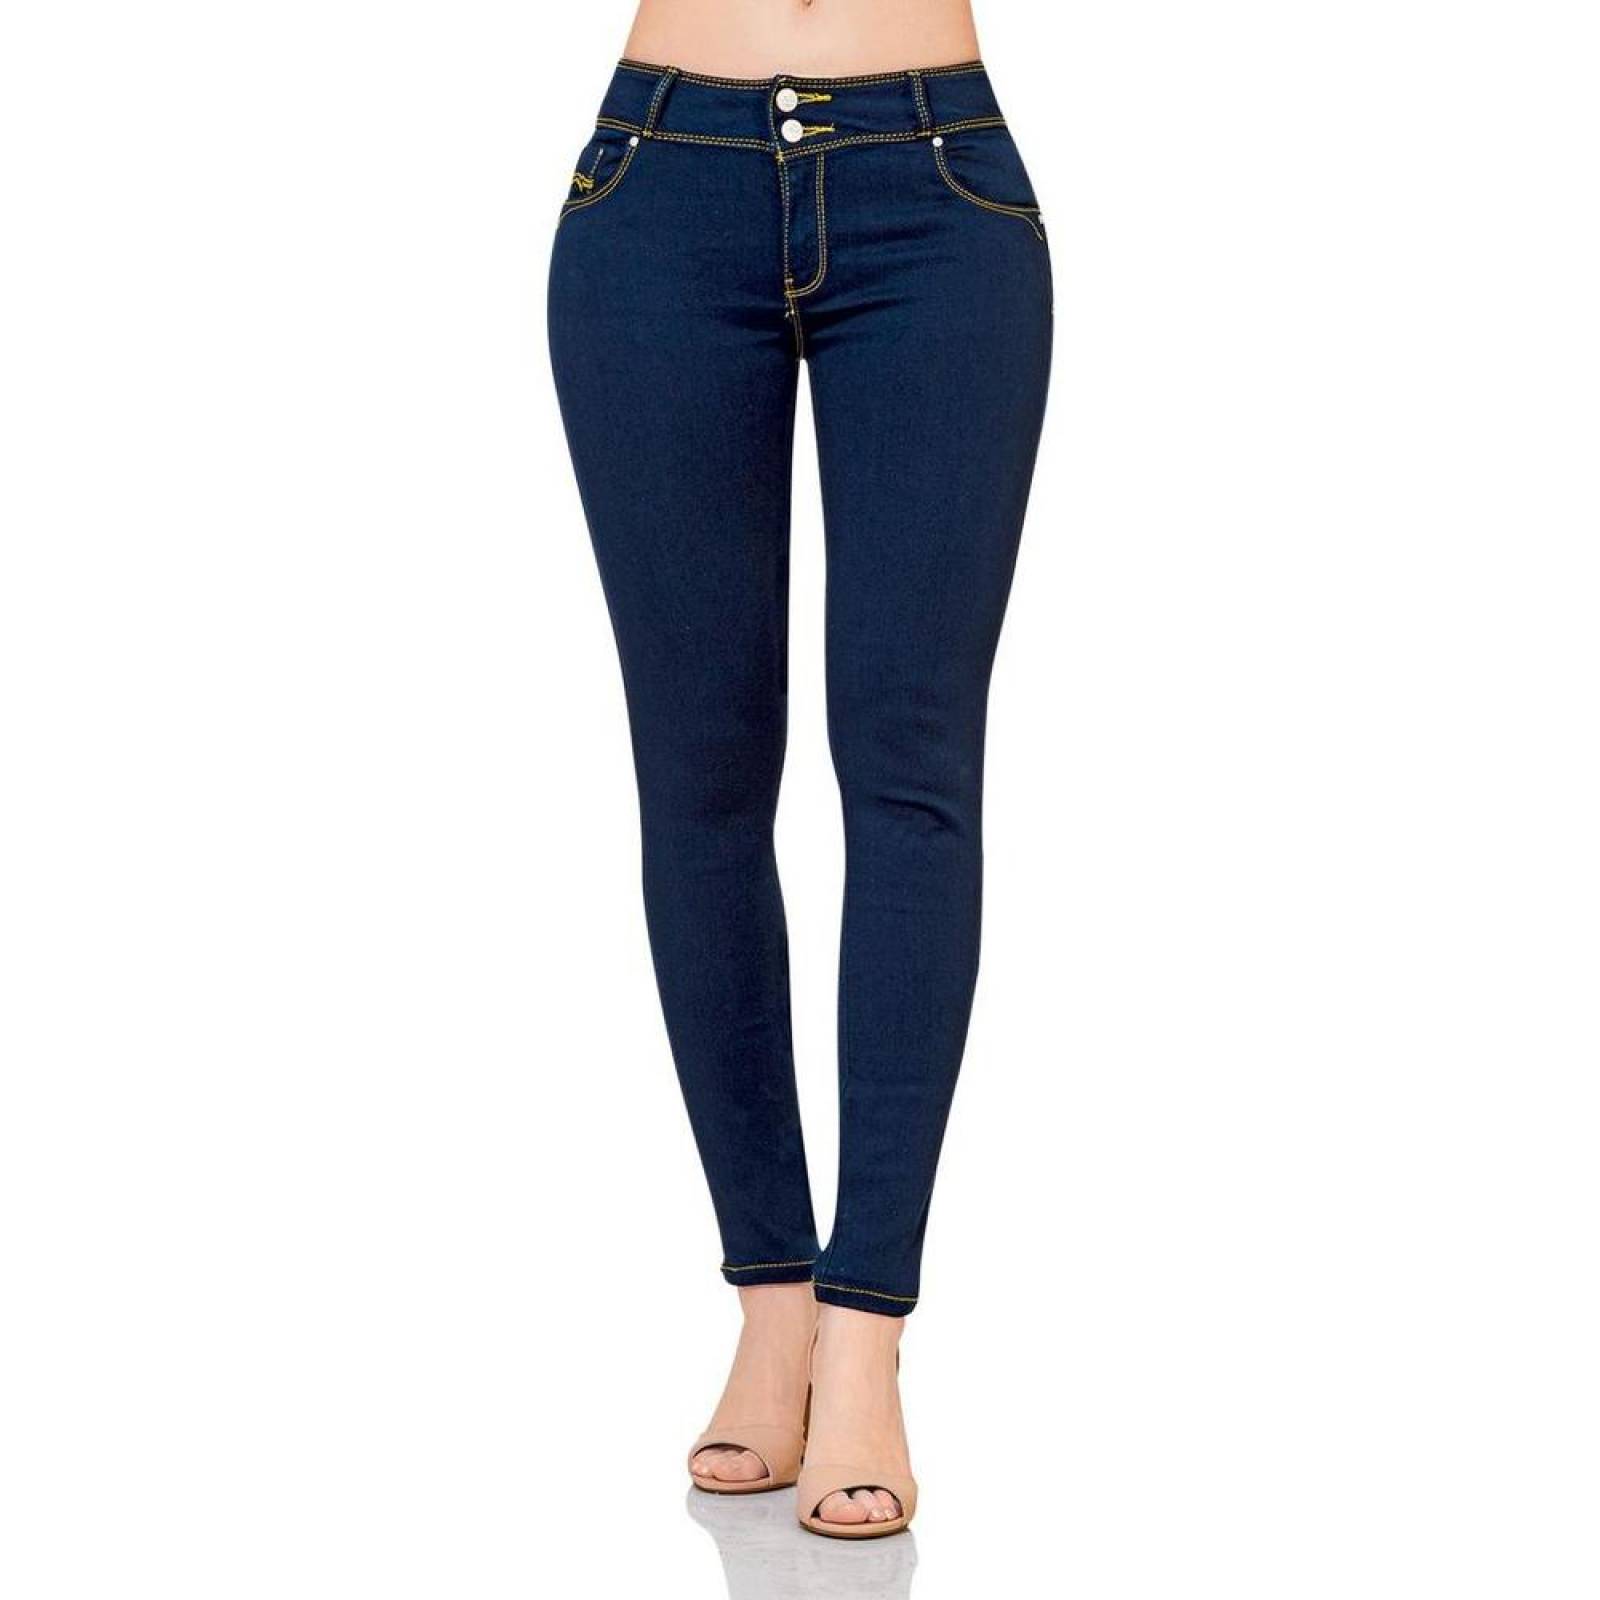 Jeans Básico Mujer Furor Indigo 62105071 Mezclilla Stretch 